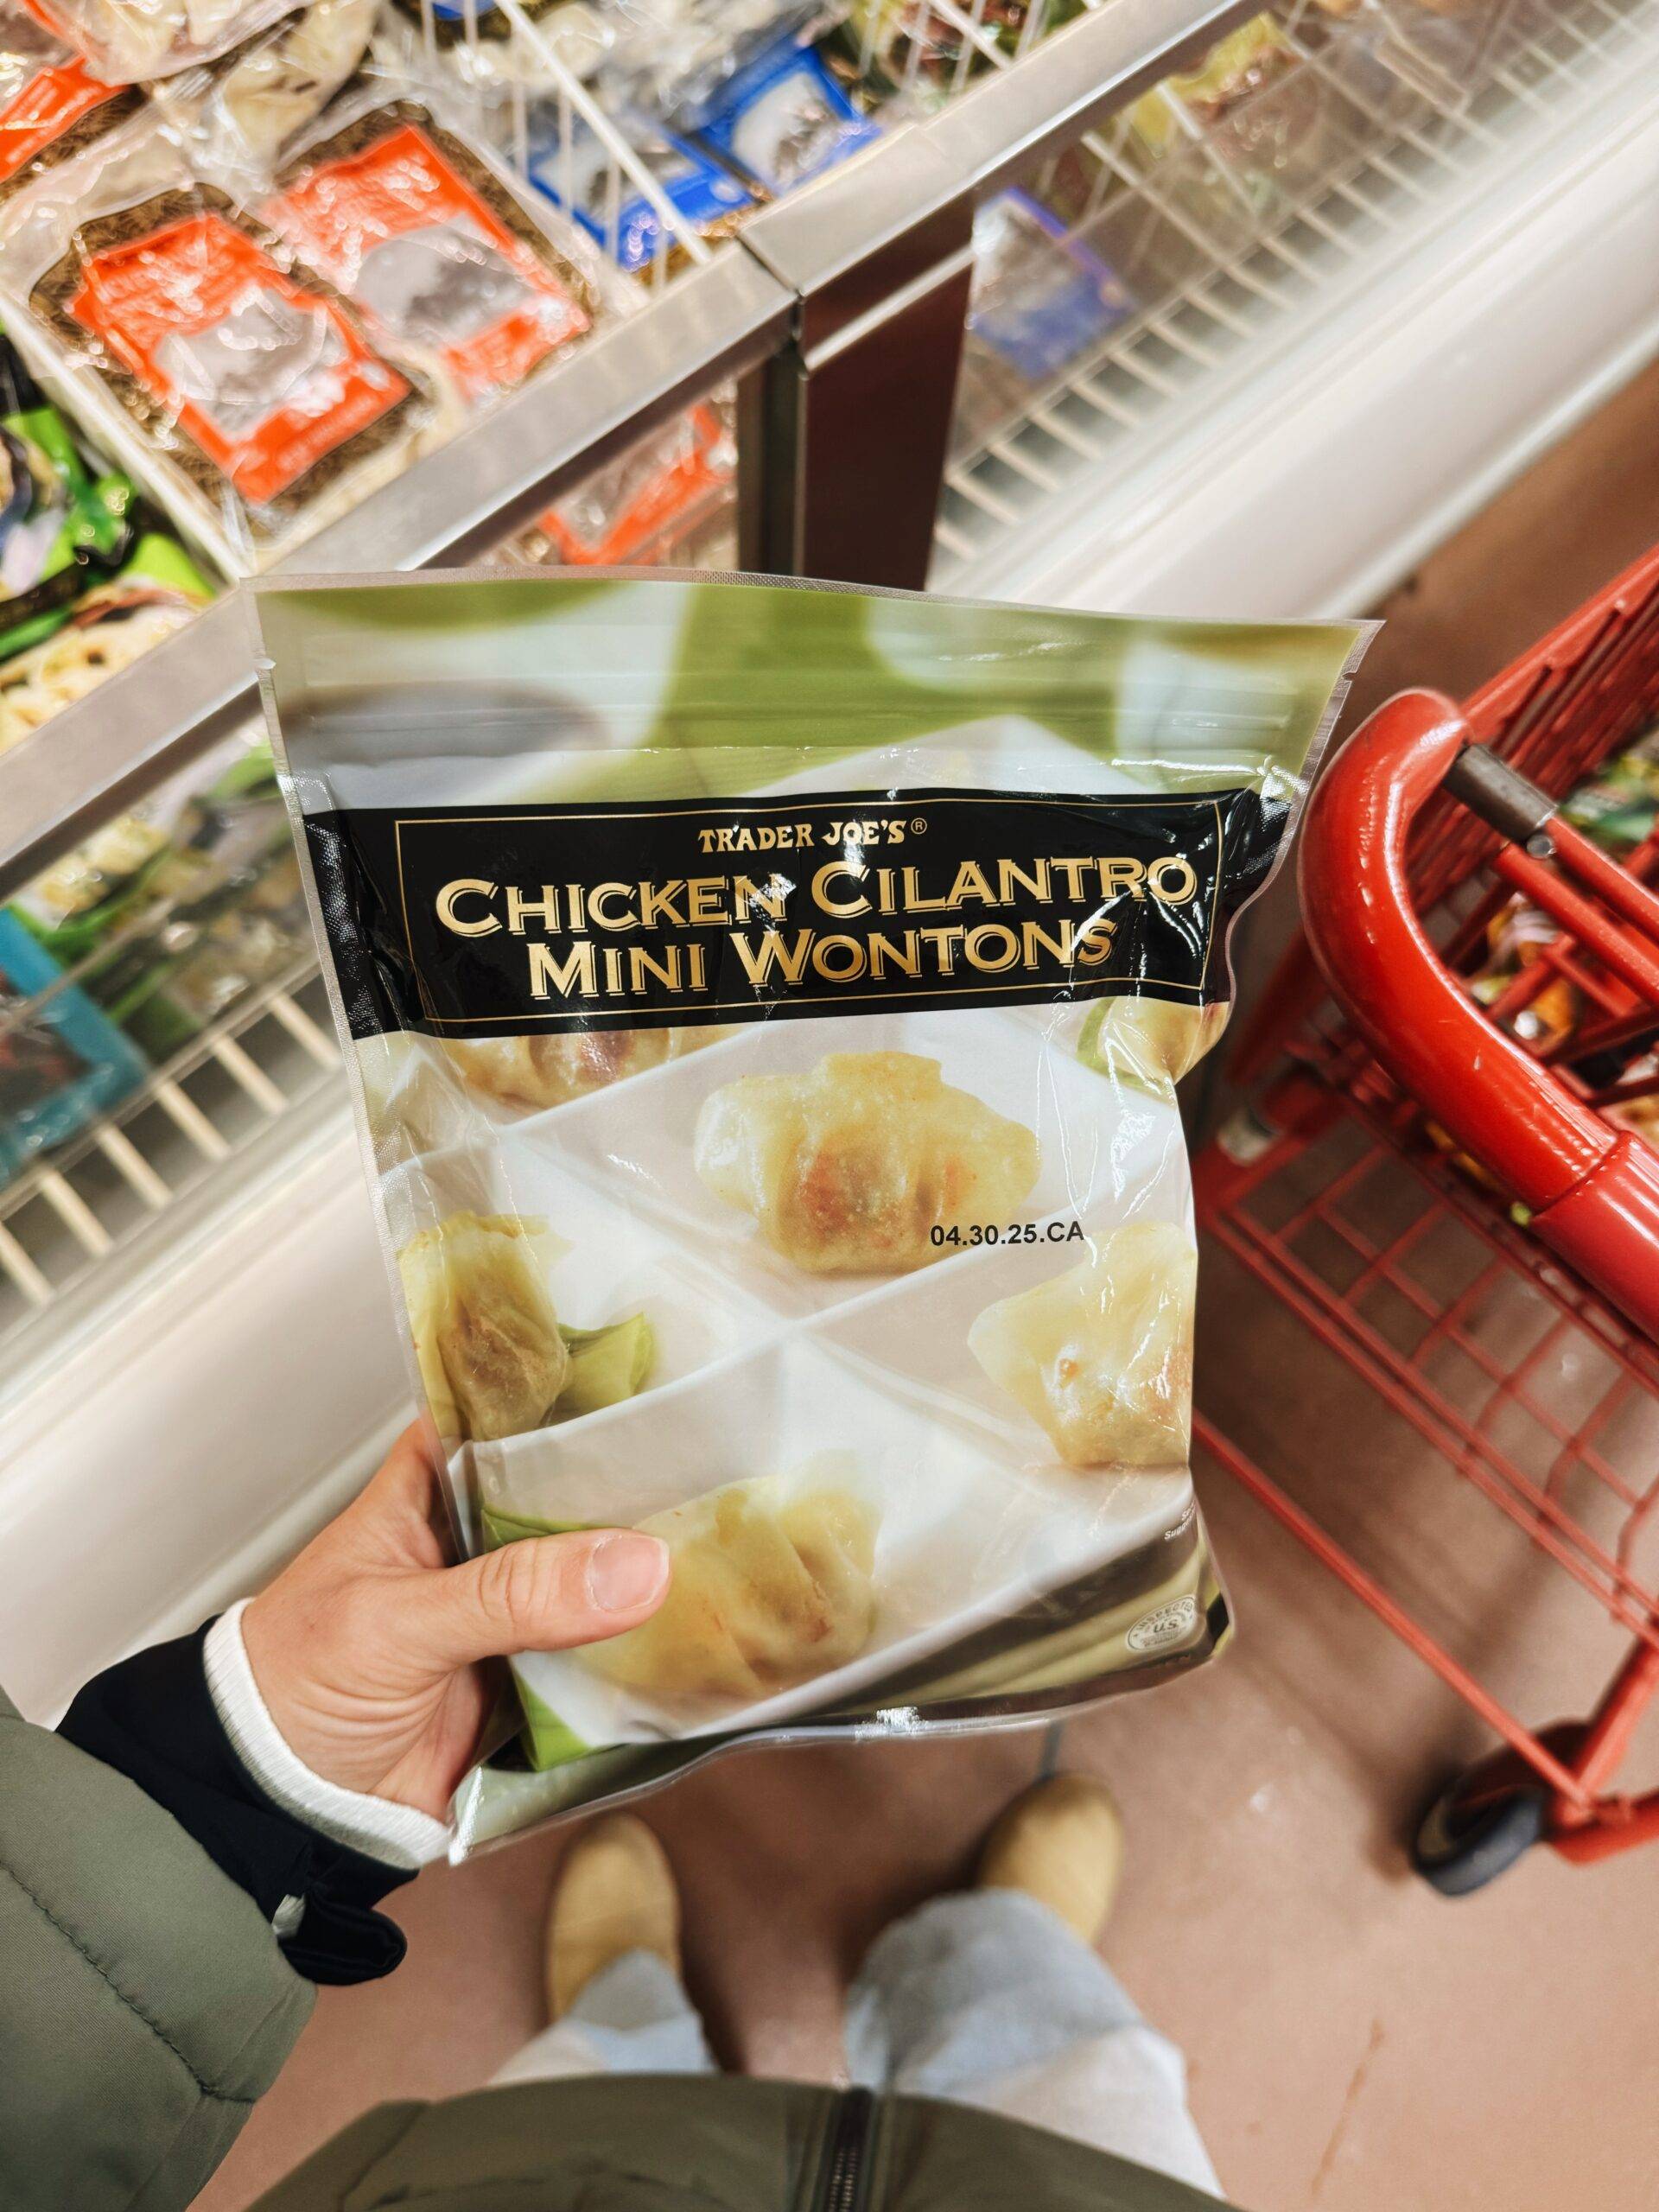 Chicken cilantro mini wontons in a bag.